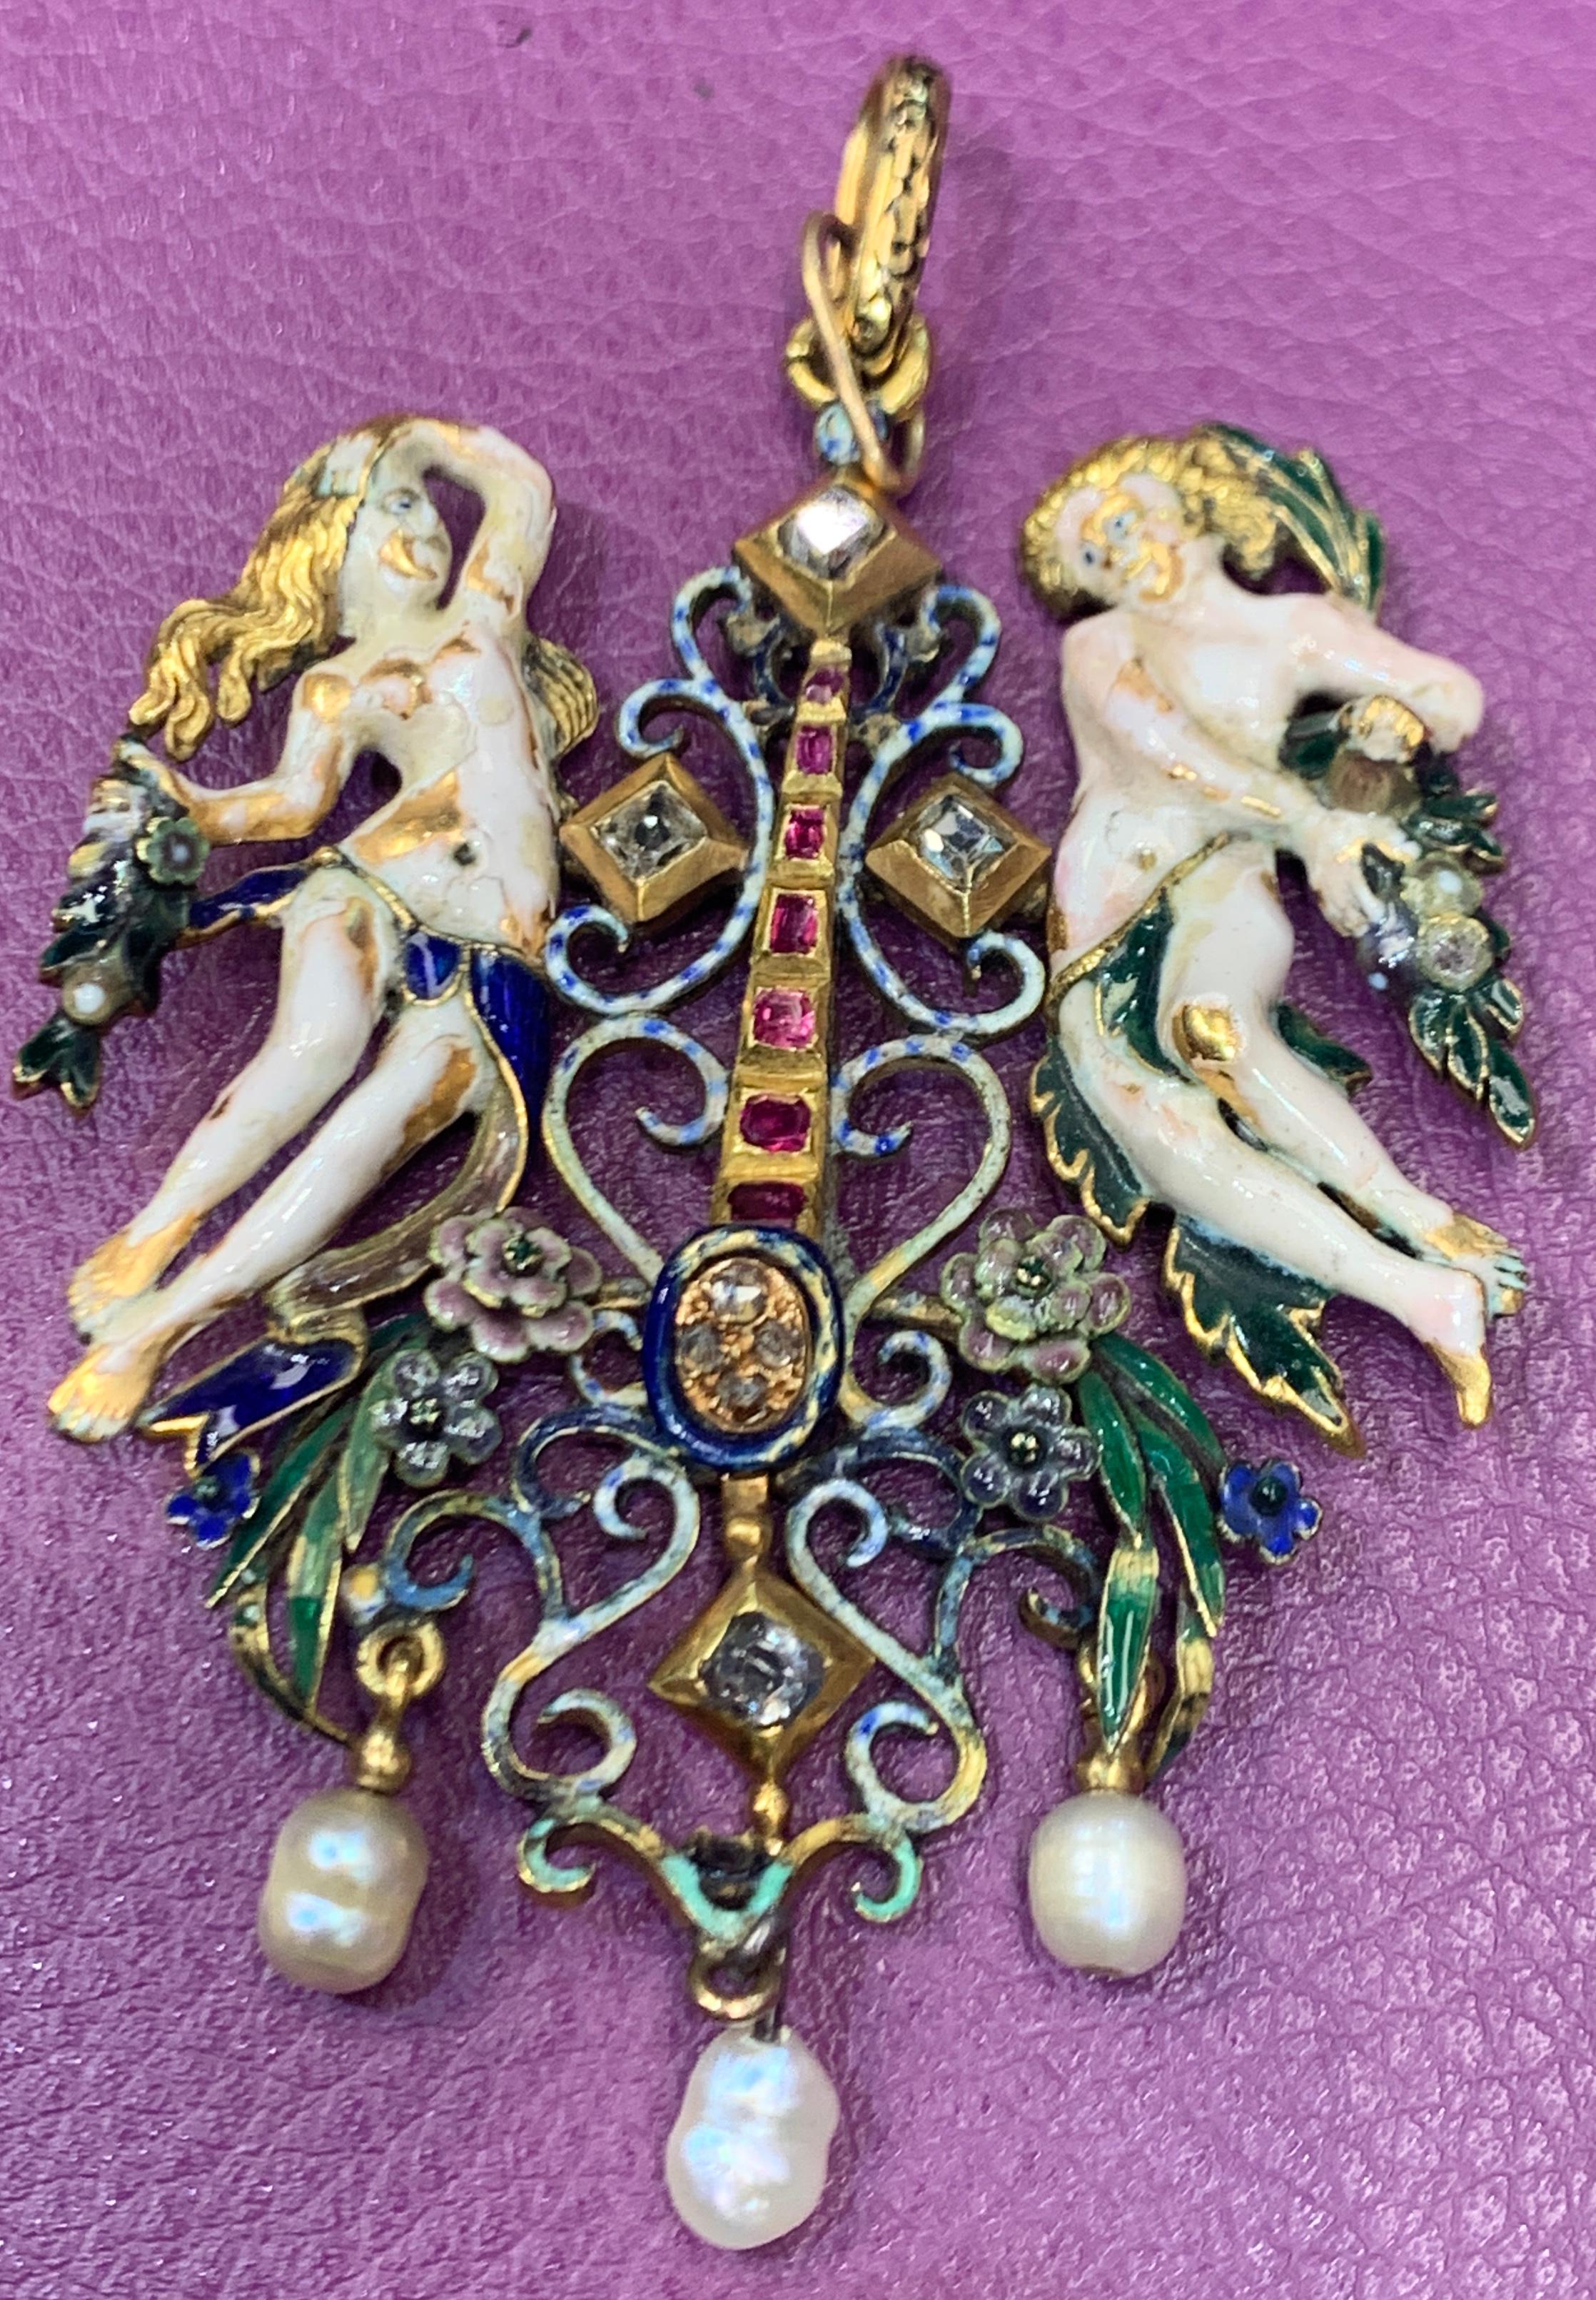 Austria-Hungarian Renaissance Revival Adam and Eve Brooch
Made Circa 1900
3 Pearls
8 Diamonds
7 Rubies
Measurements: 3